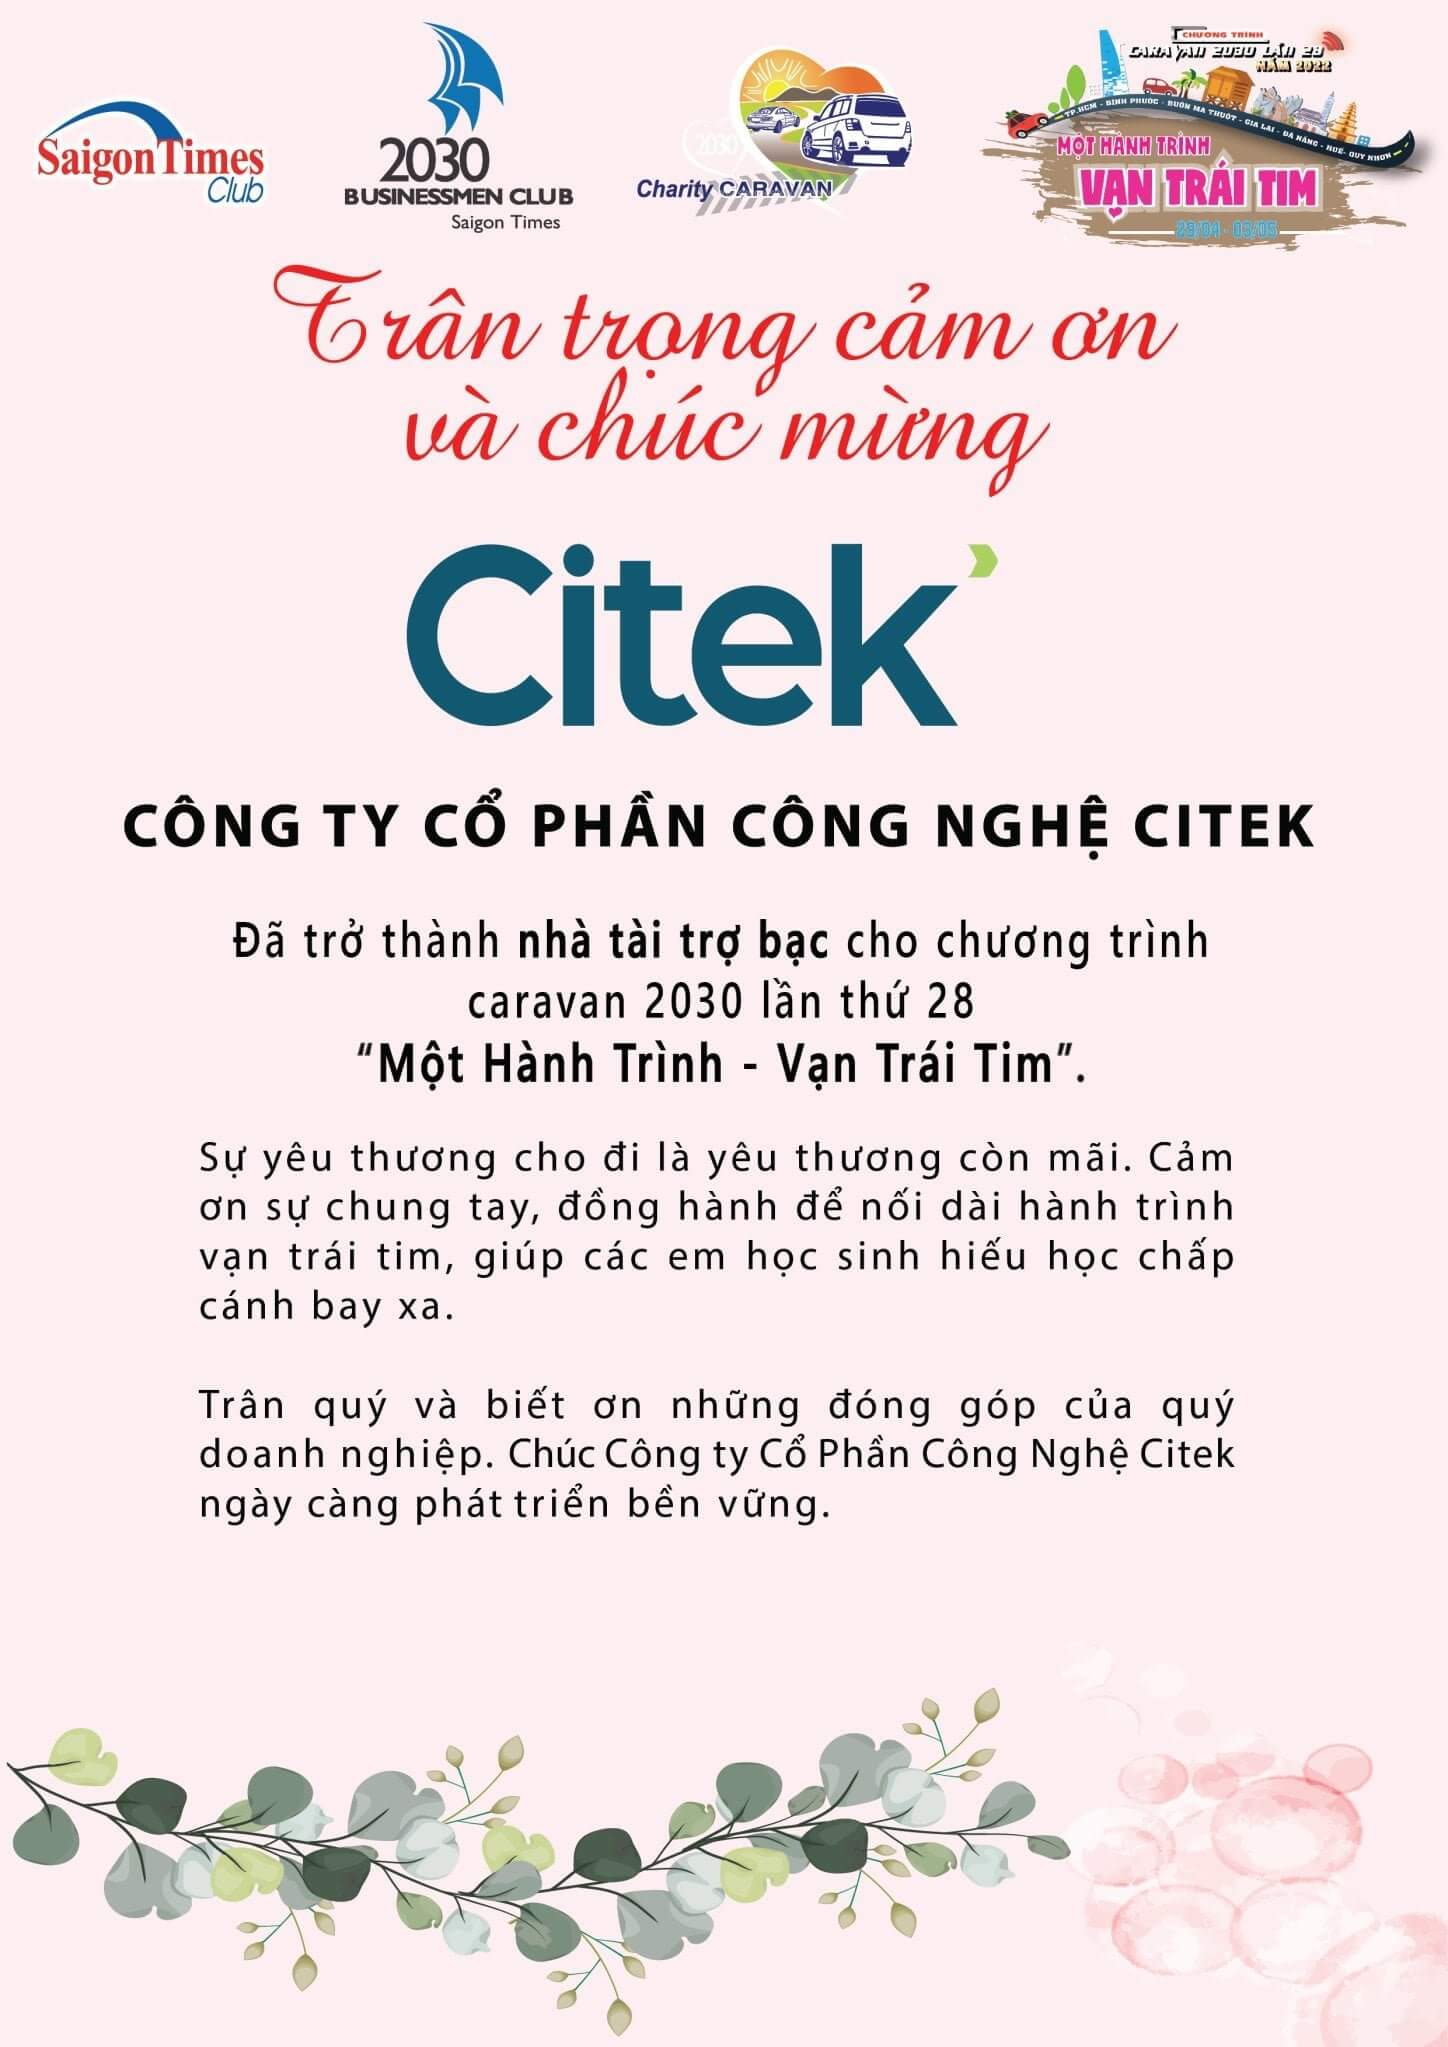  citek-dong-hanh-cung-caravan-thien-nguyen-lan-thu-28-8